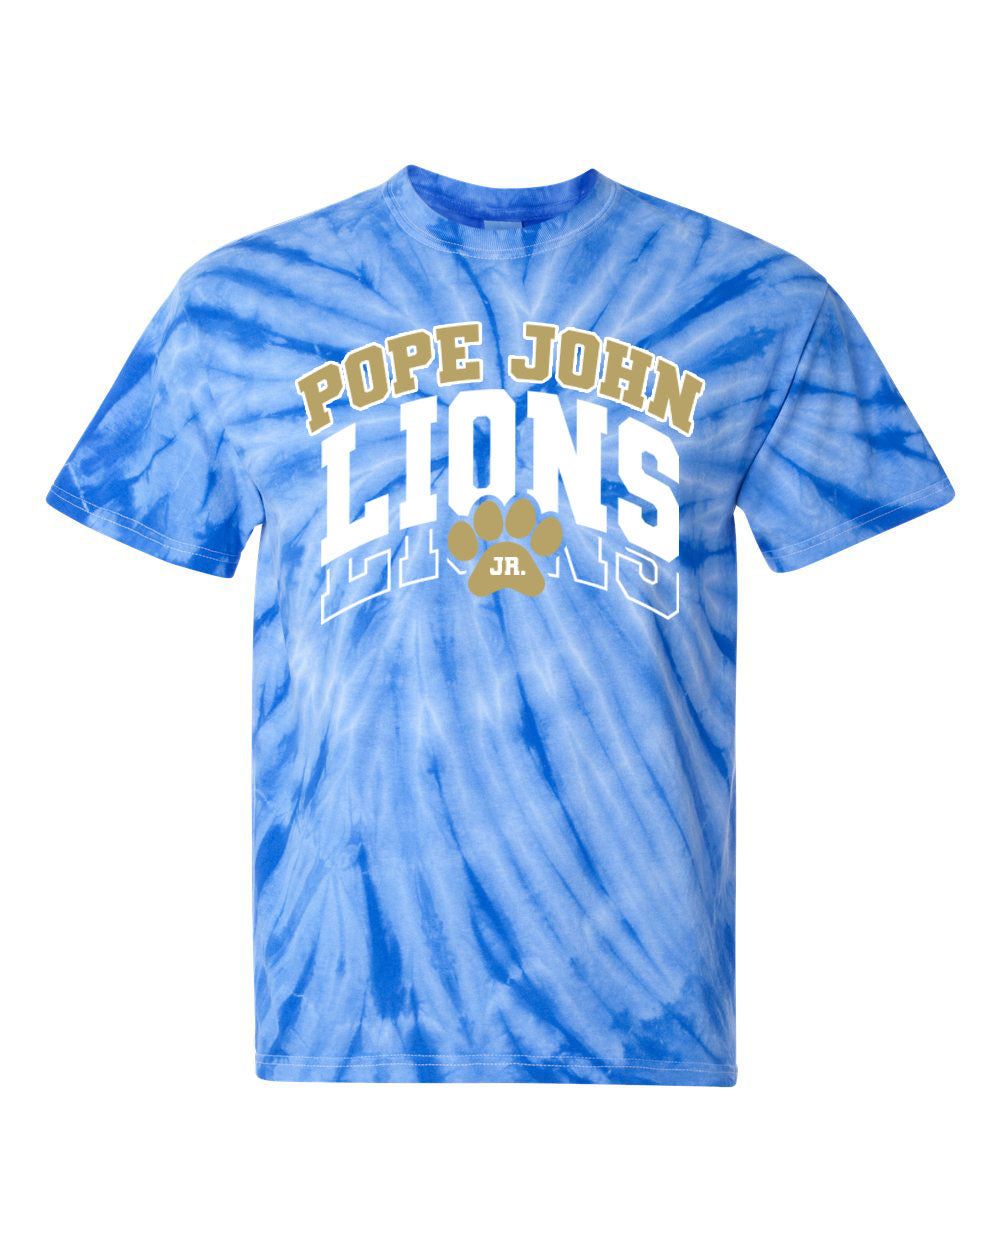 Lions Cheer Design 1 Tie Dye t-shirt